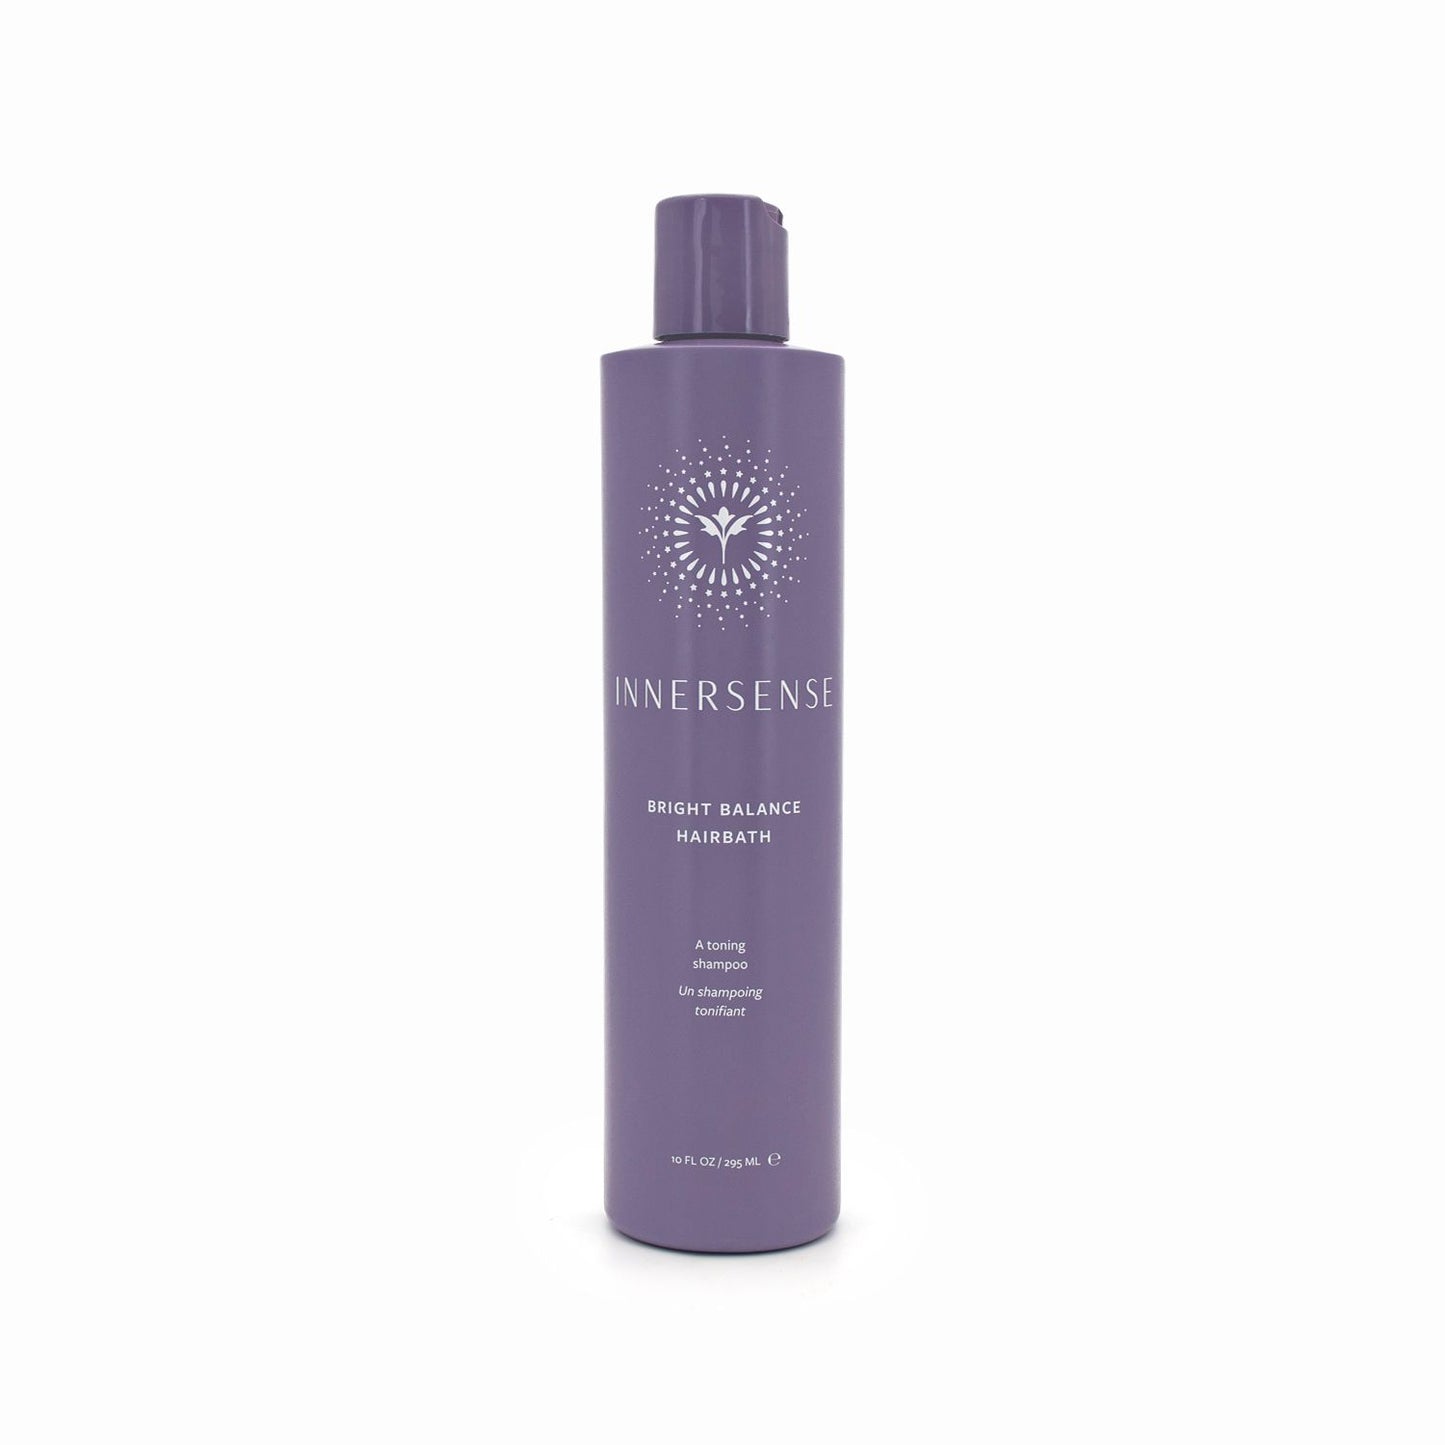 INNERSENSE Bright Balance Hairbath Shampoo 295ml - Imperfect Container